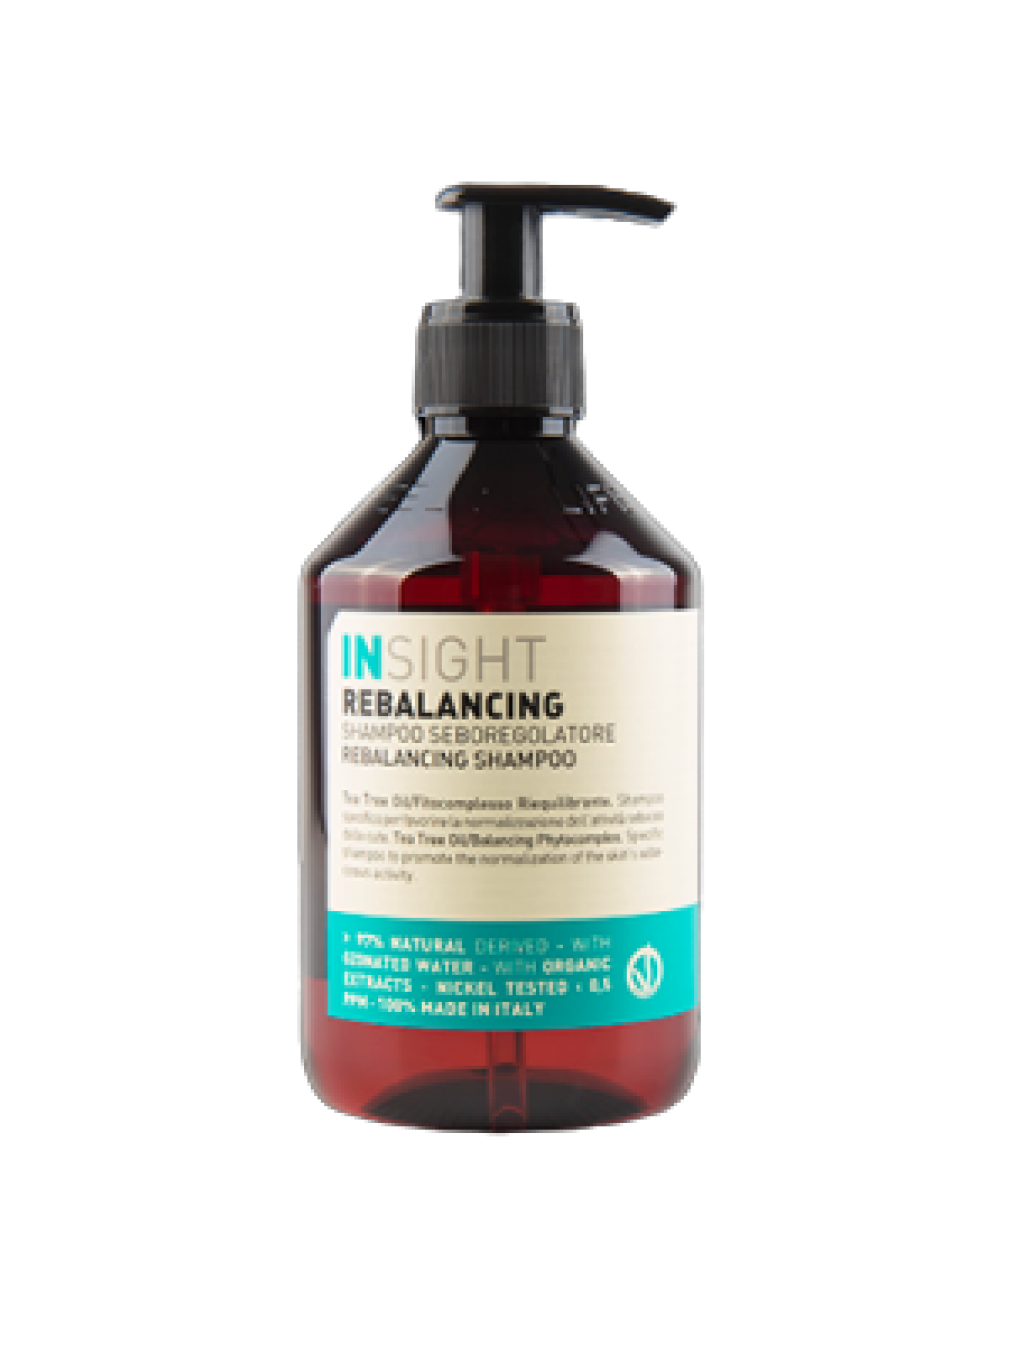 Insight Rebalancing Control Shampoo 有機平衡油脂洗頭水 400ml